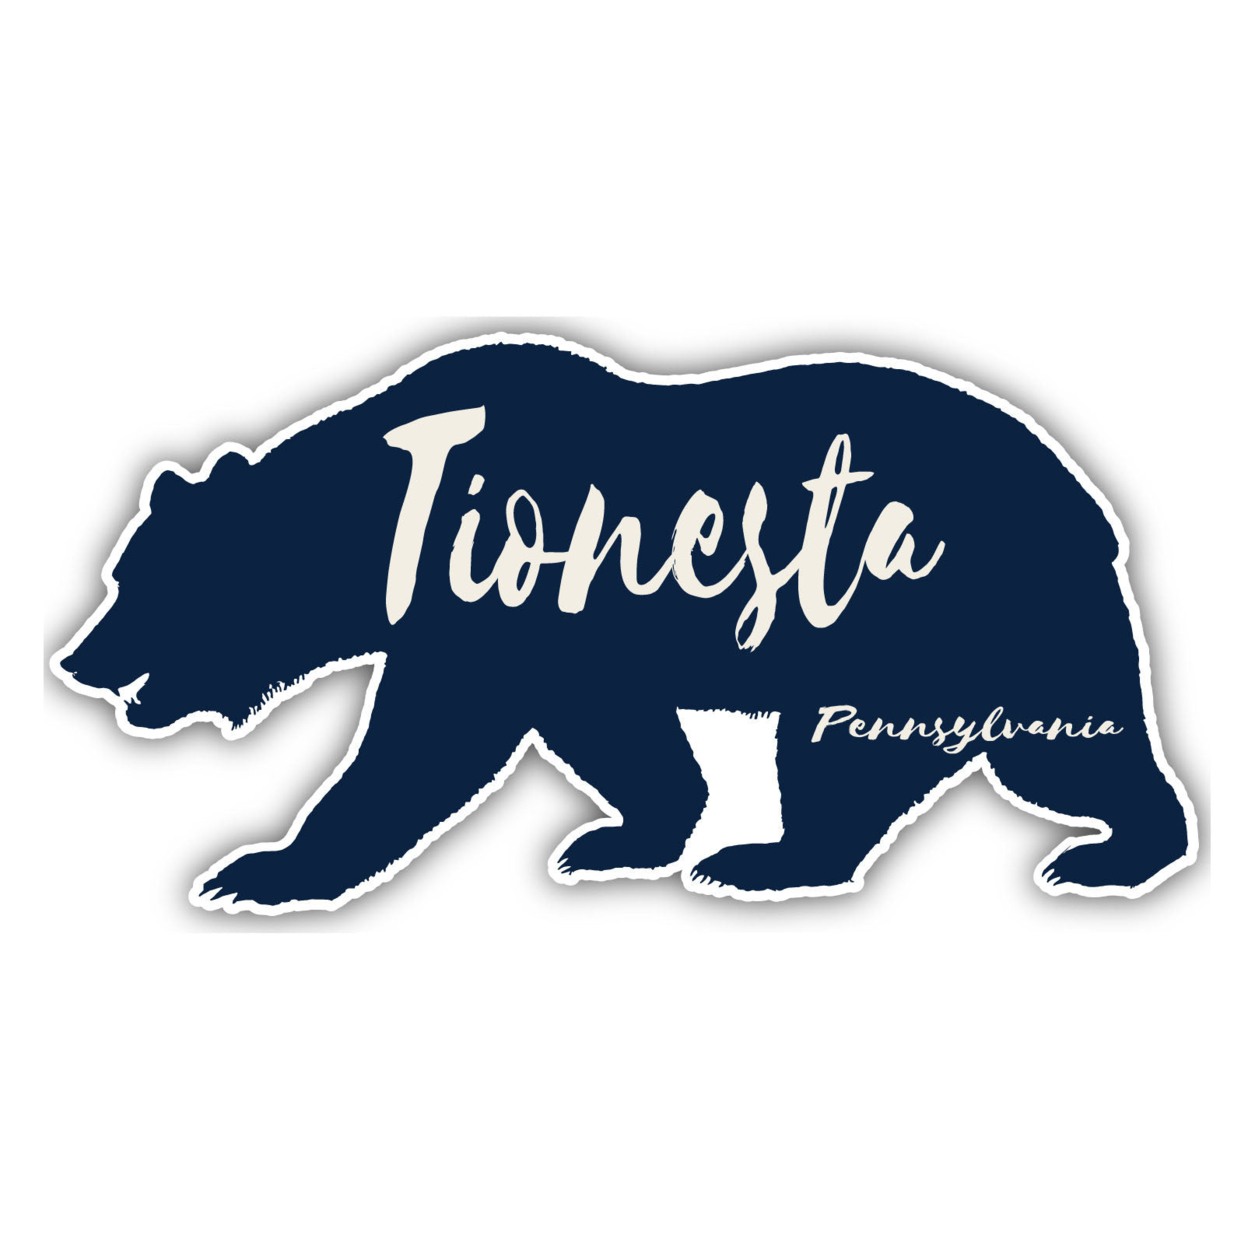 Tionesta Pennsylvania Souvenir Decorative Stickers (Choose Theme And Size) - Single Unit, 4-Inch, Bear